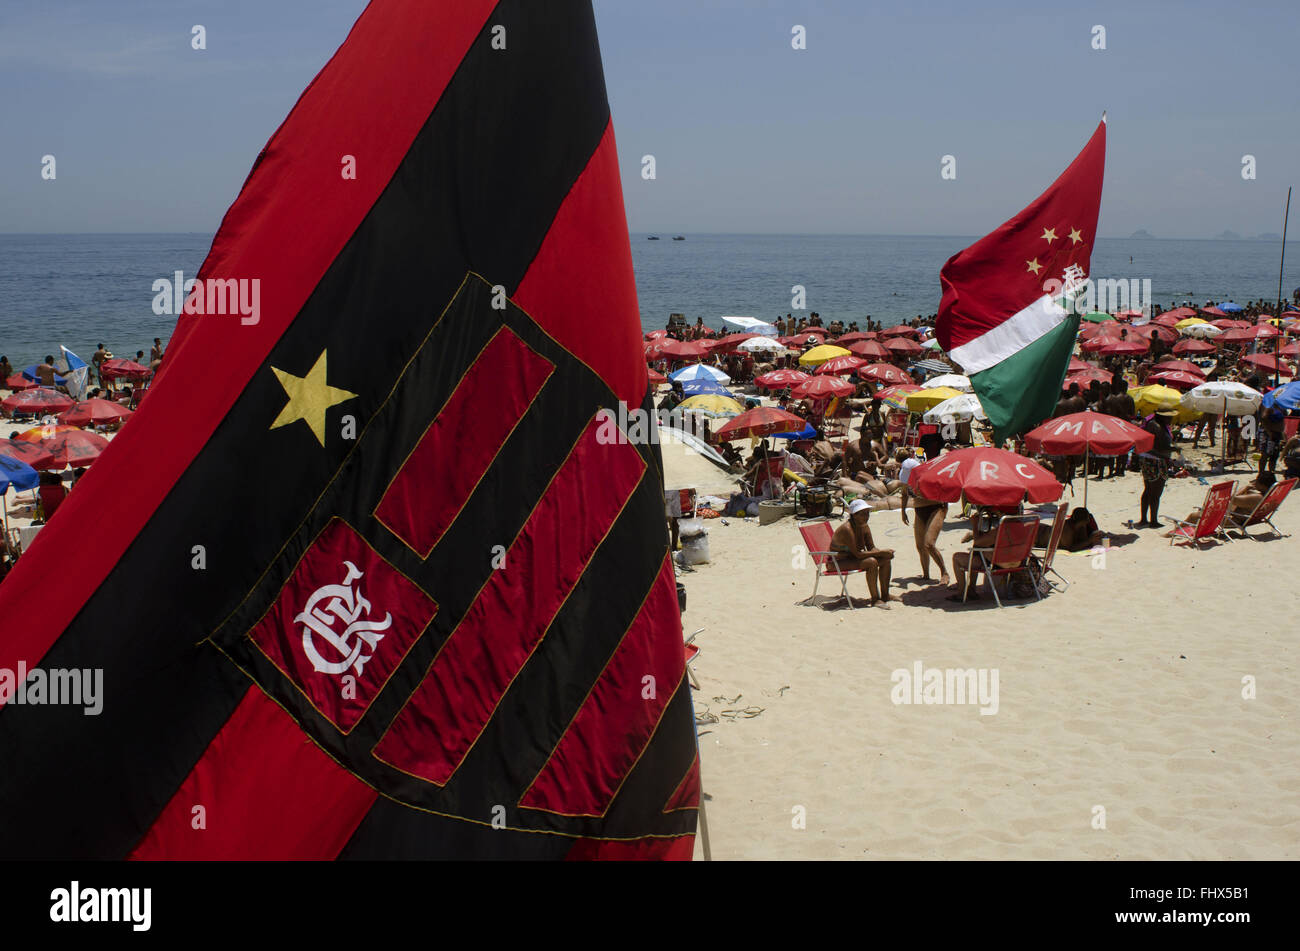 Flag Football club Flamengo and Fluminense Football Club on crowded beach - south of the city Stock Photo